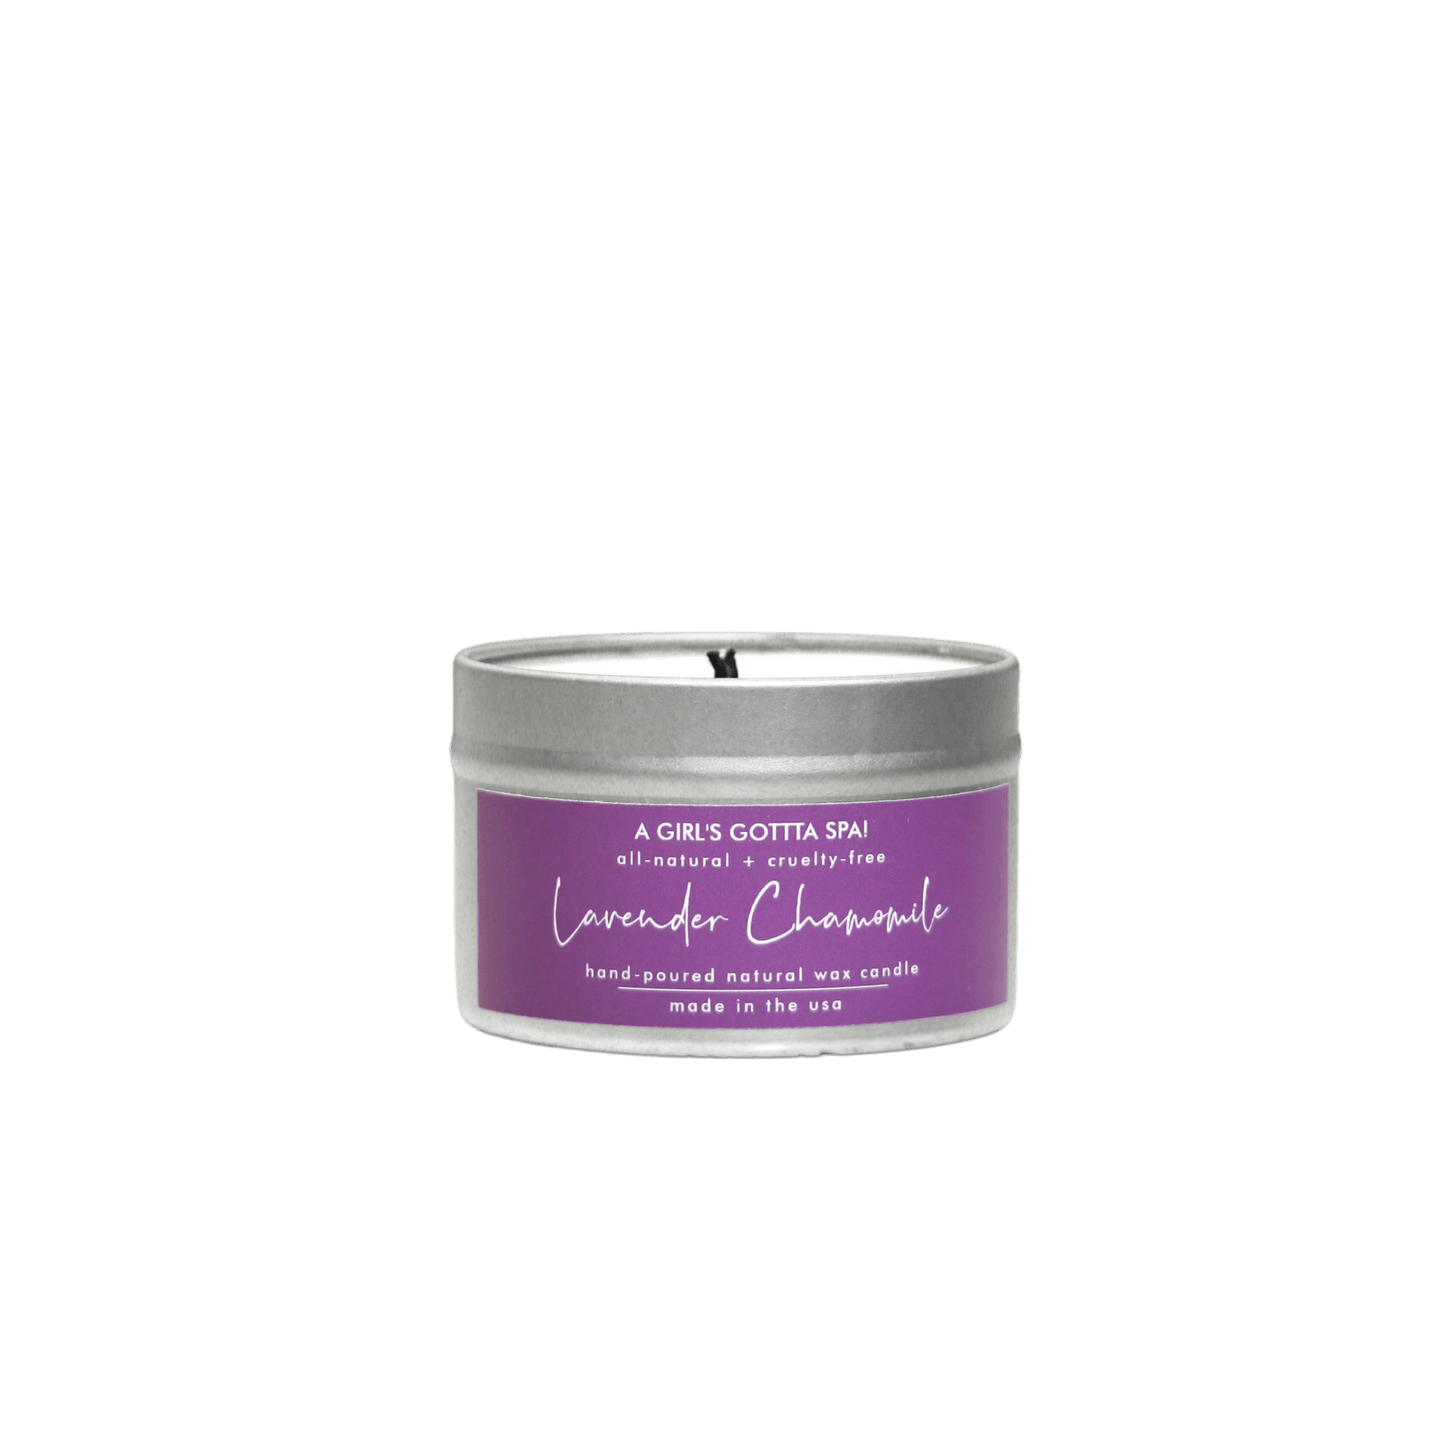 A Girl's Gotta Spa! - Lavender Chamomile Natural Wax Candle - 4 oz - 25hr burn